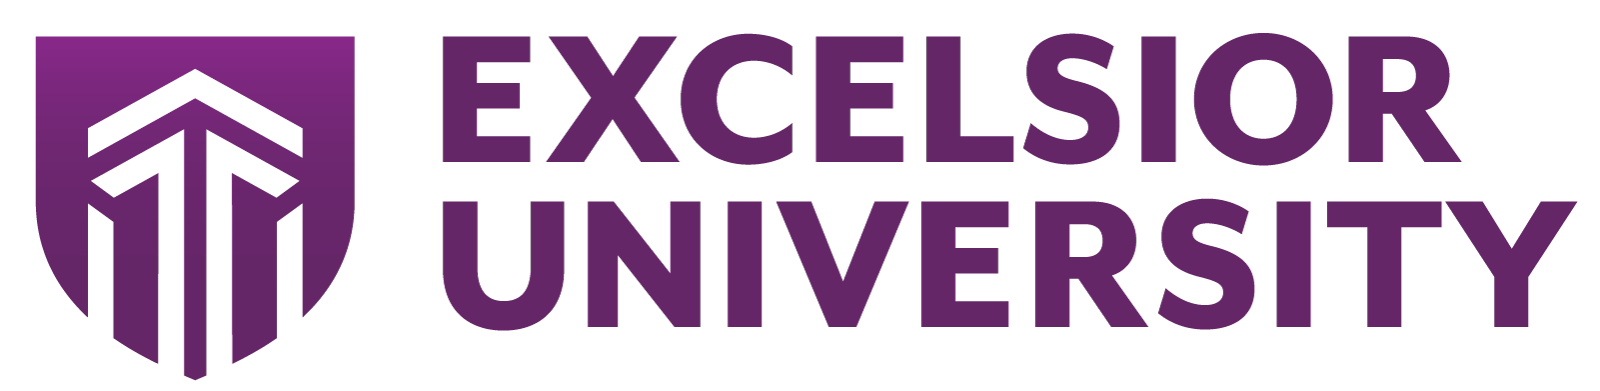 Excelsior University 